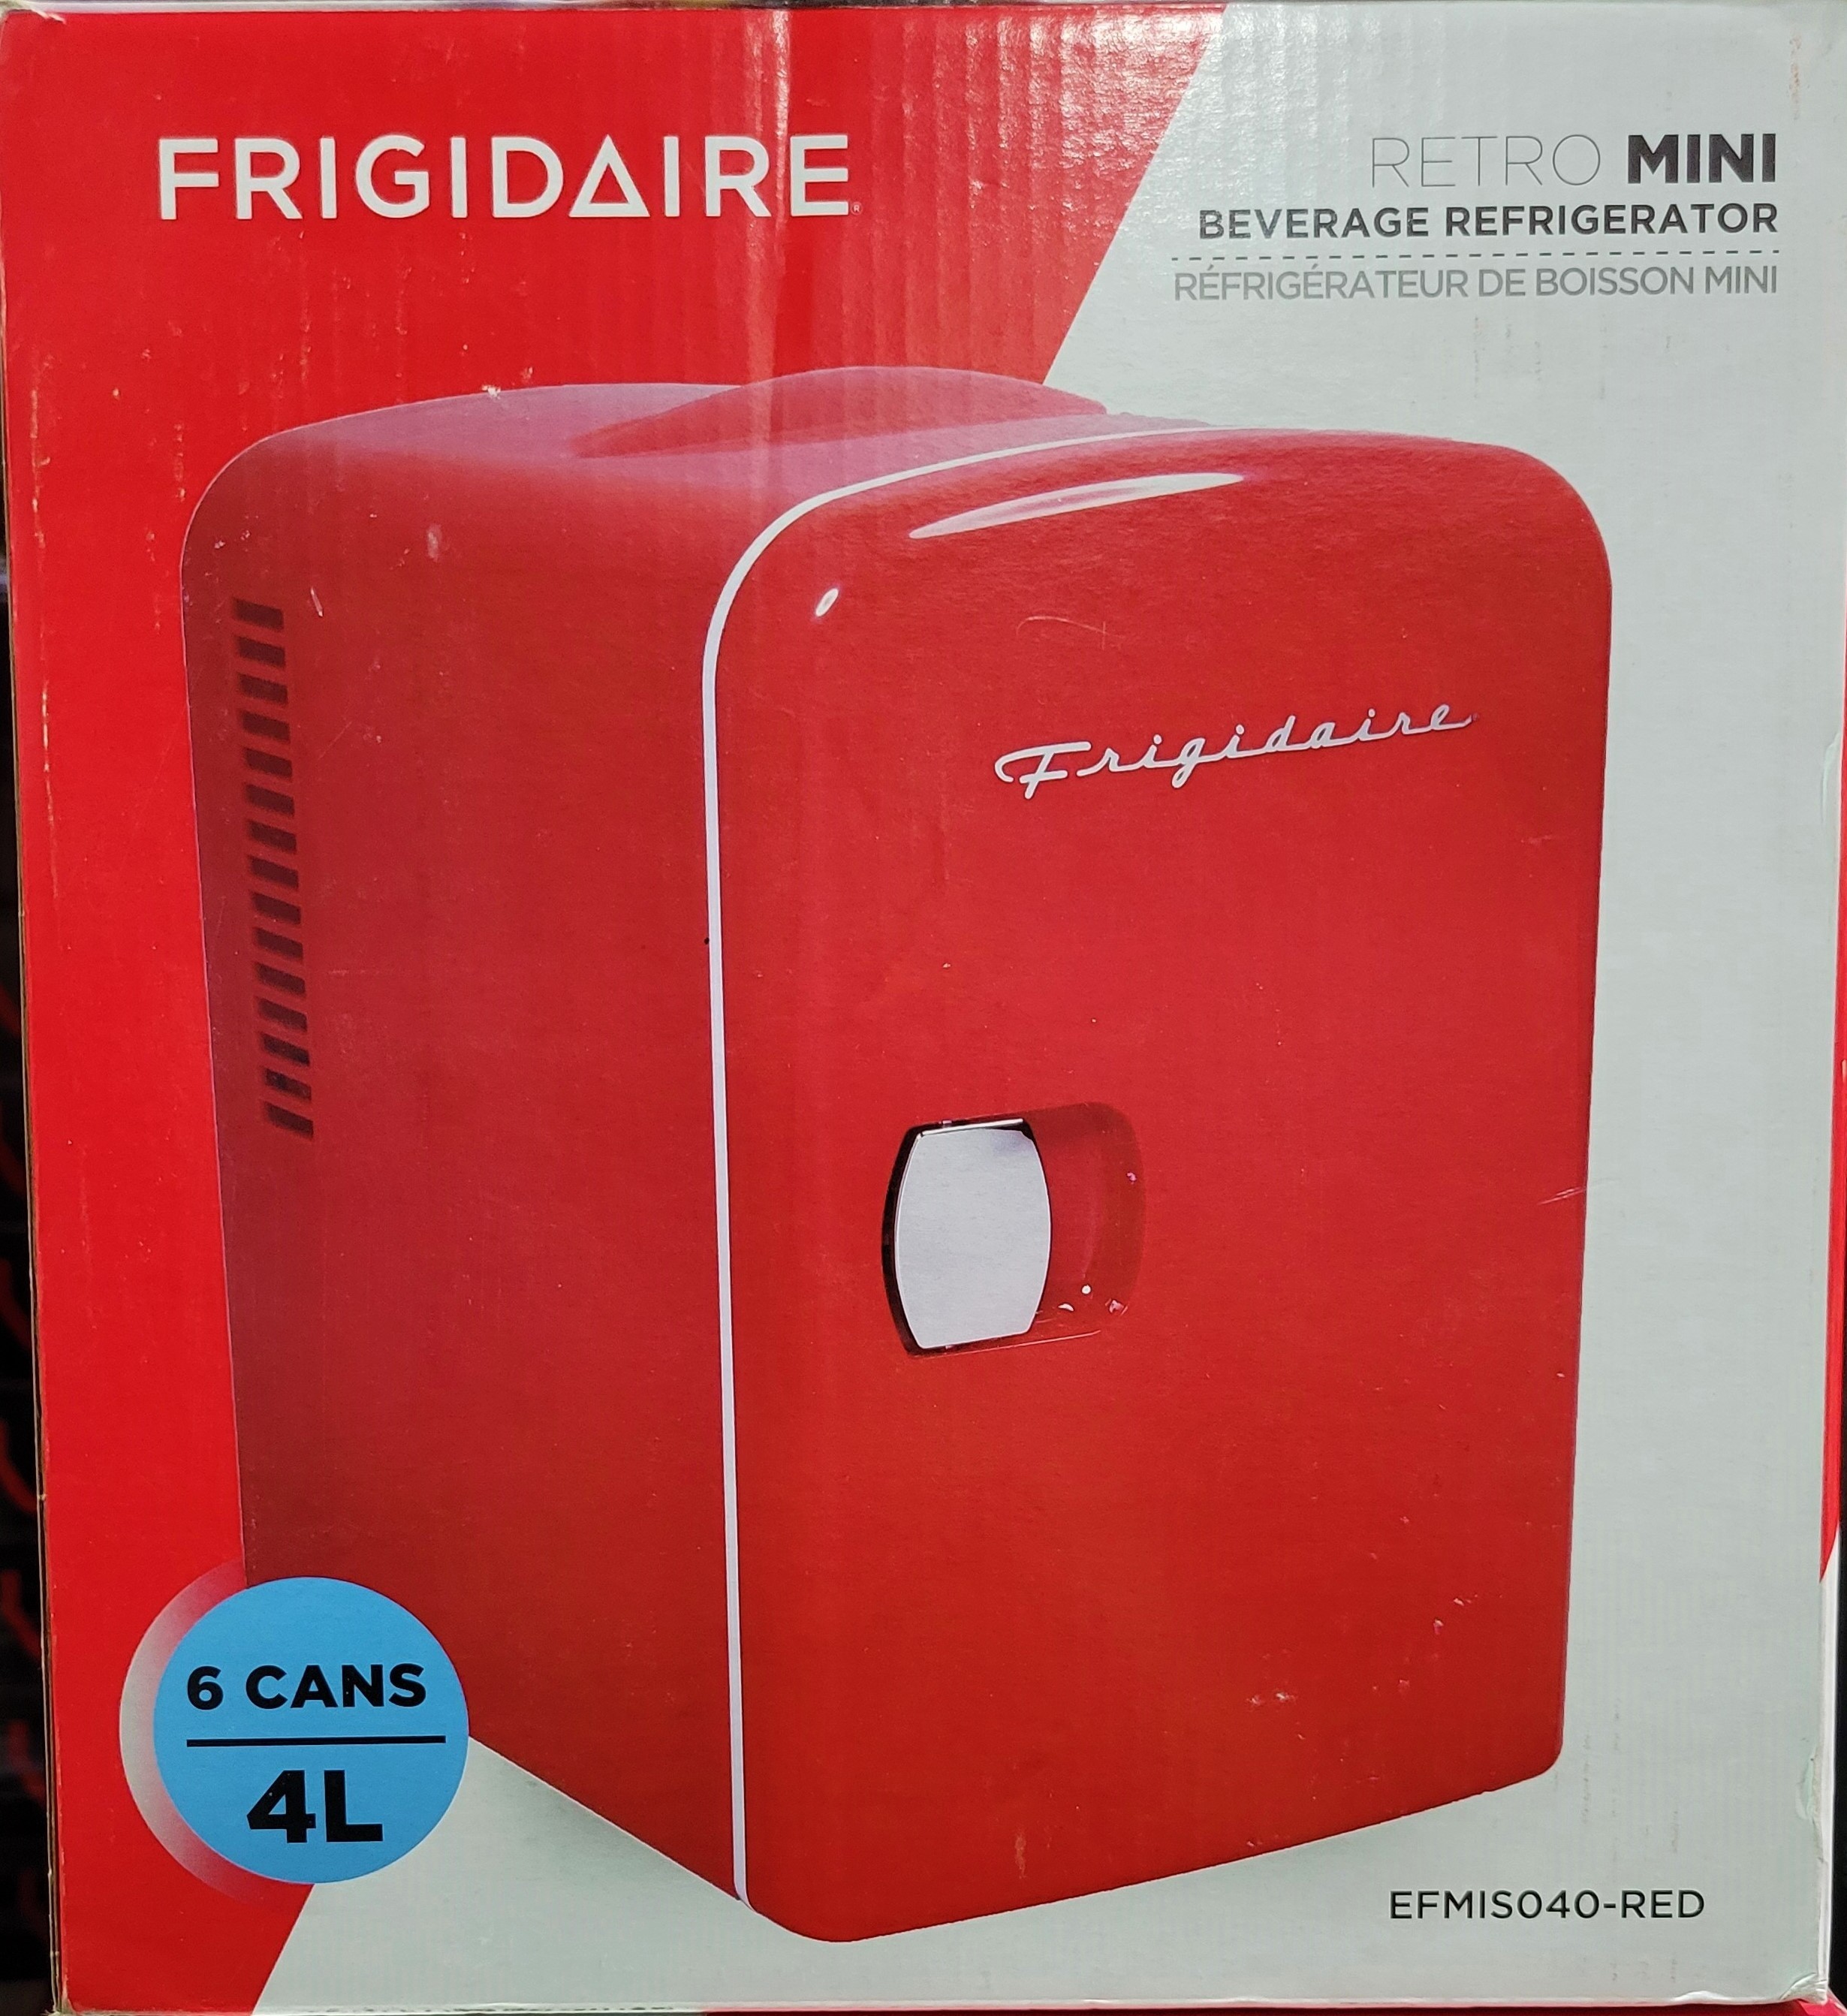 FRIGIDAIRE 6-CAN MINI FRIDGE - RED